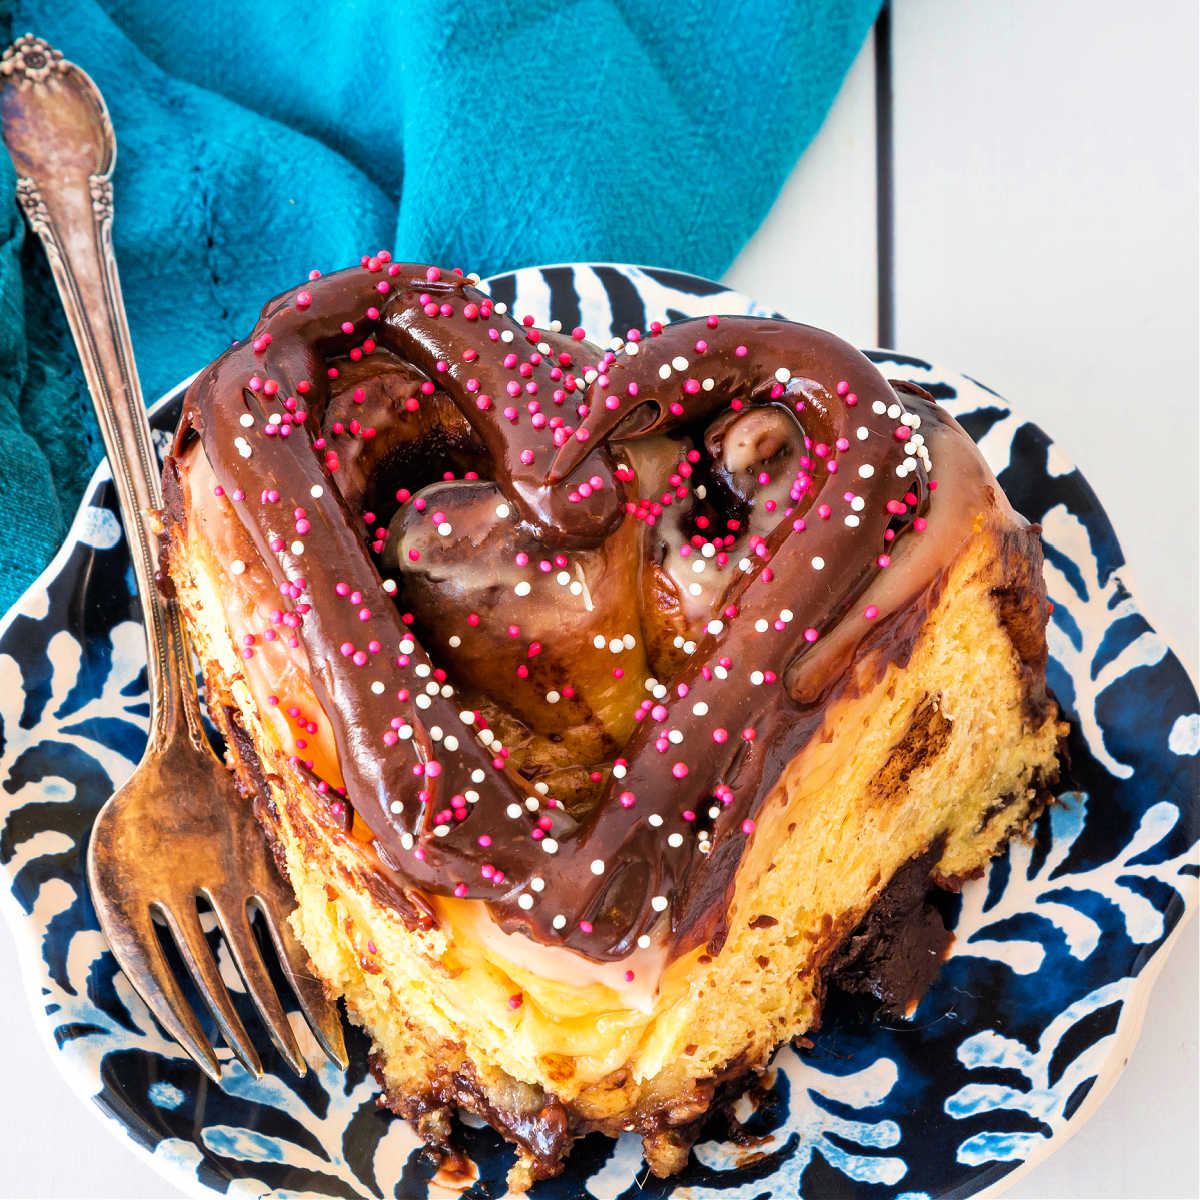 A heart-shaped chocolate honey bun with a fork.